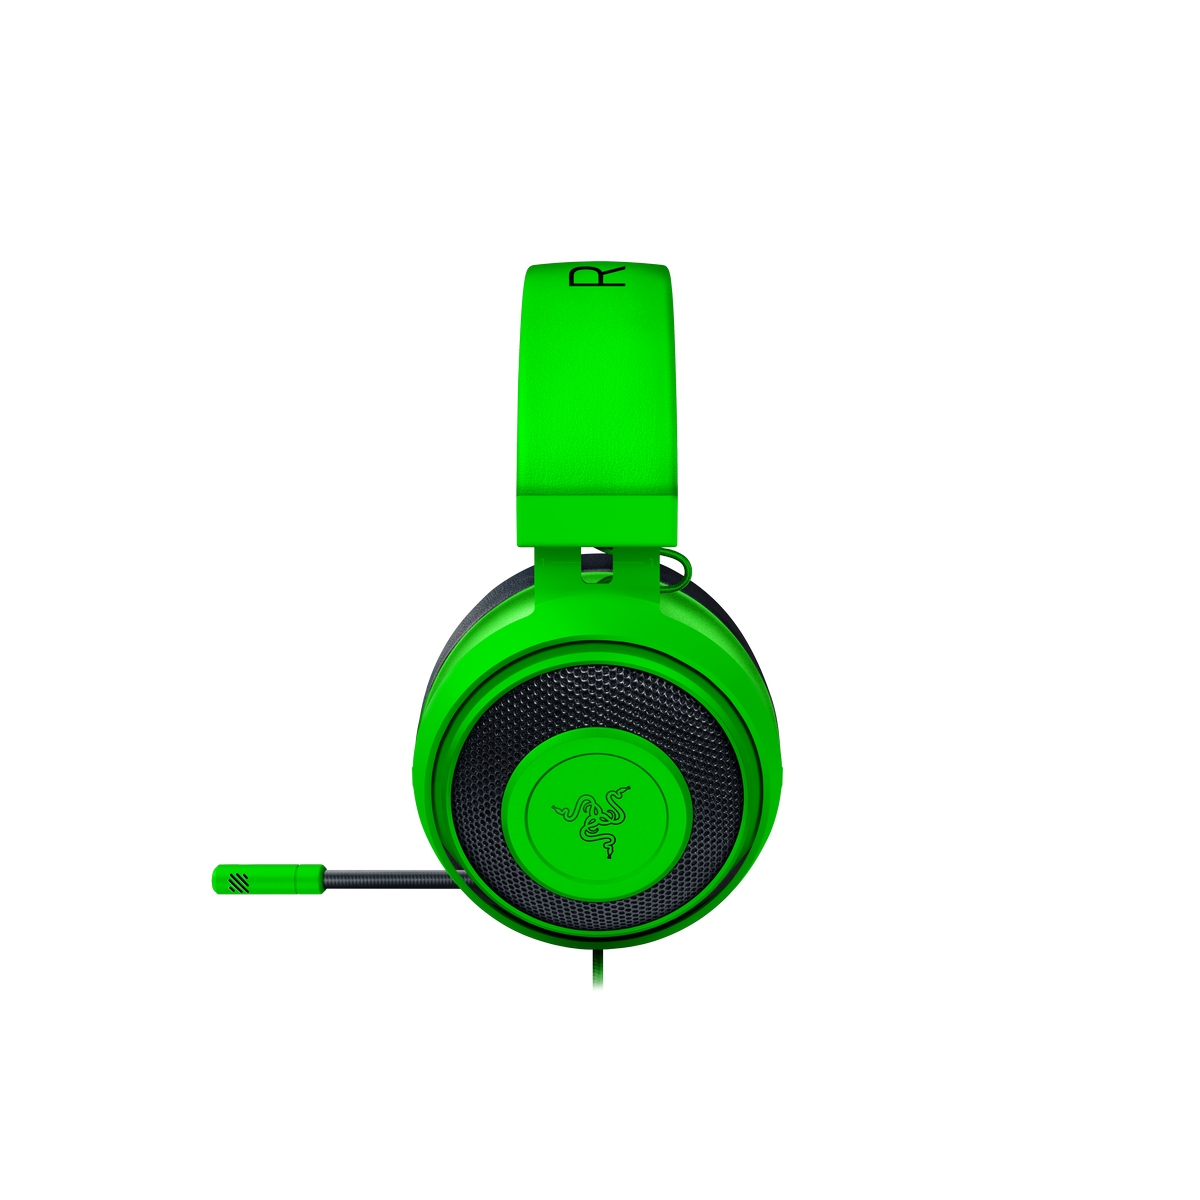 Razer - Razer Kraken Multi-Platform Gaming Headset - Green (RZ04-02830200-R3M1)